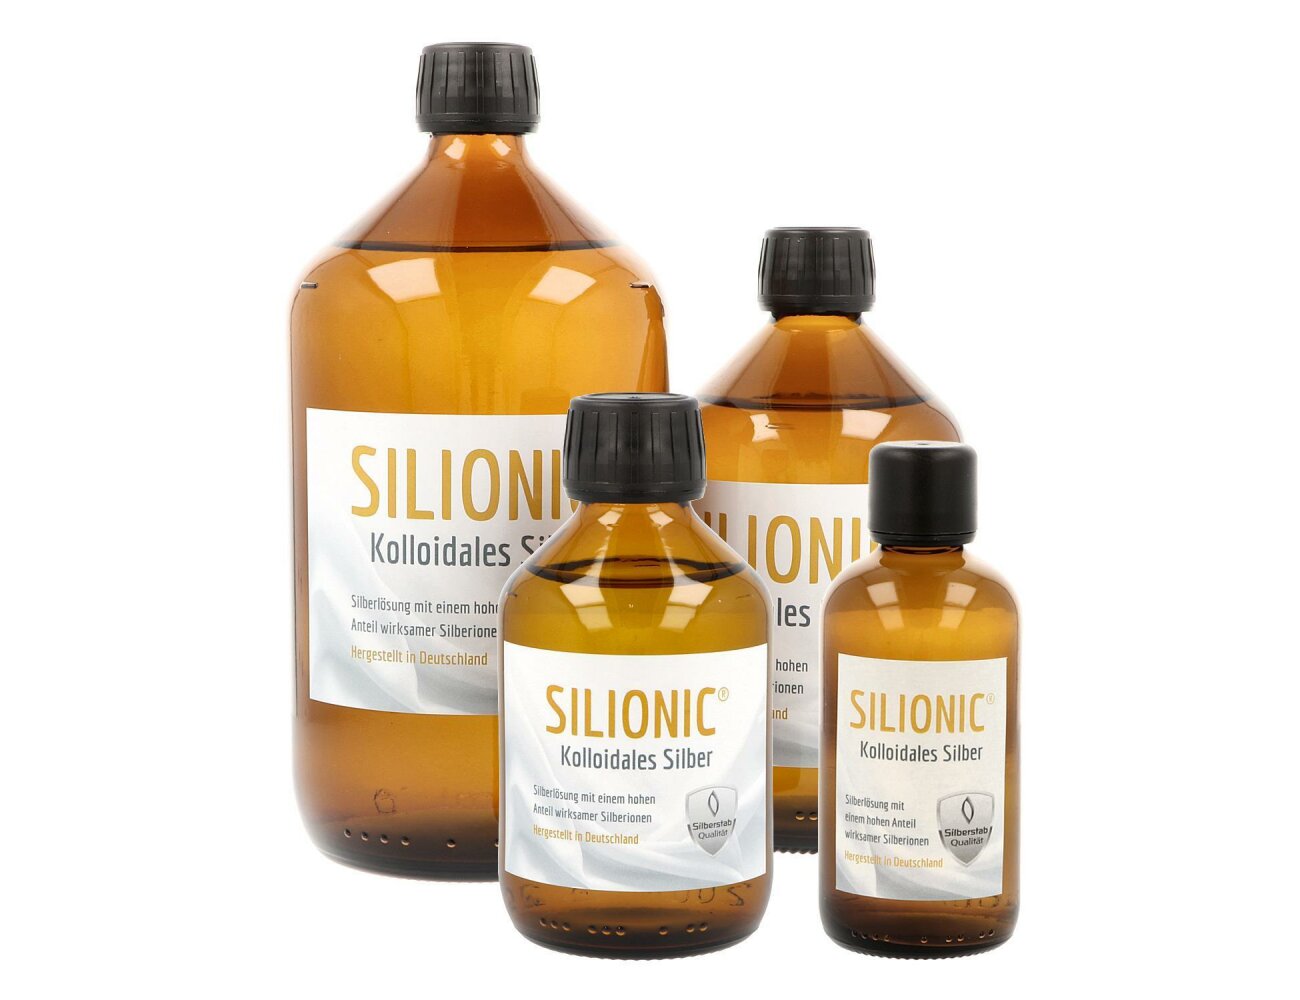 Silionic Kolloidales Silber 50 ppm